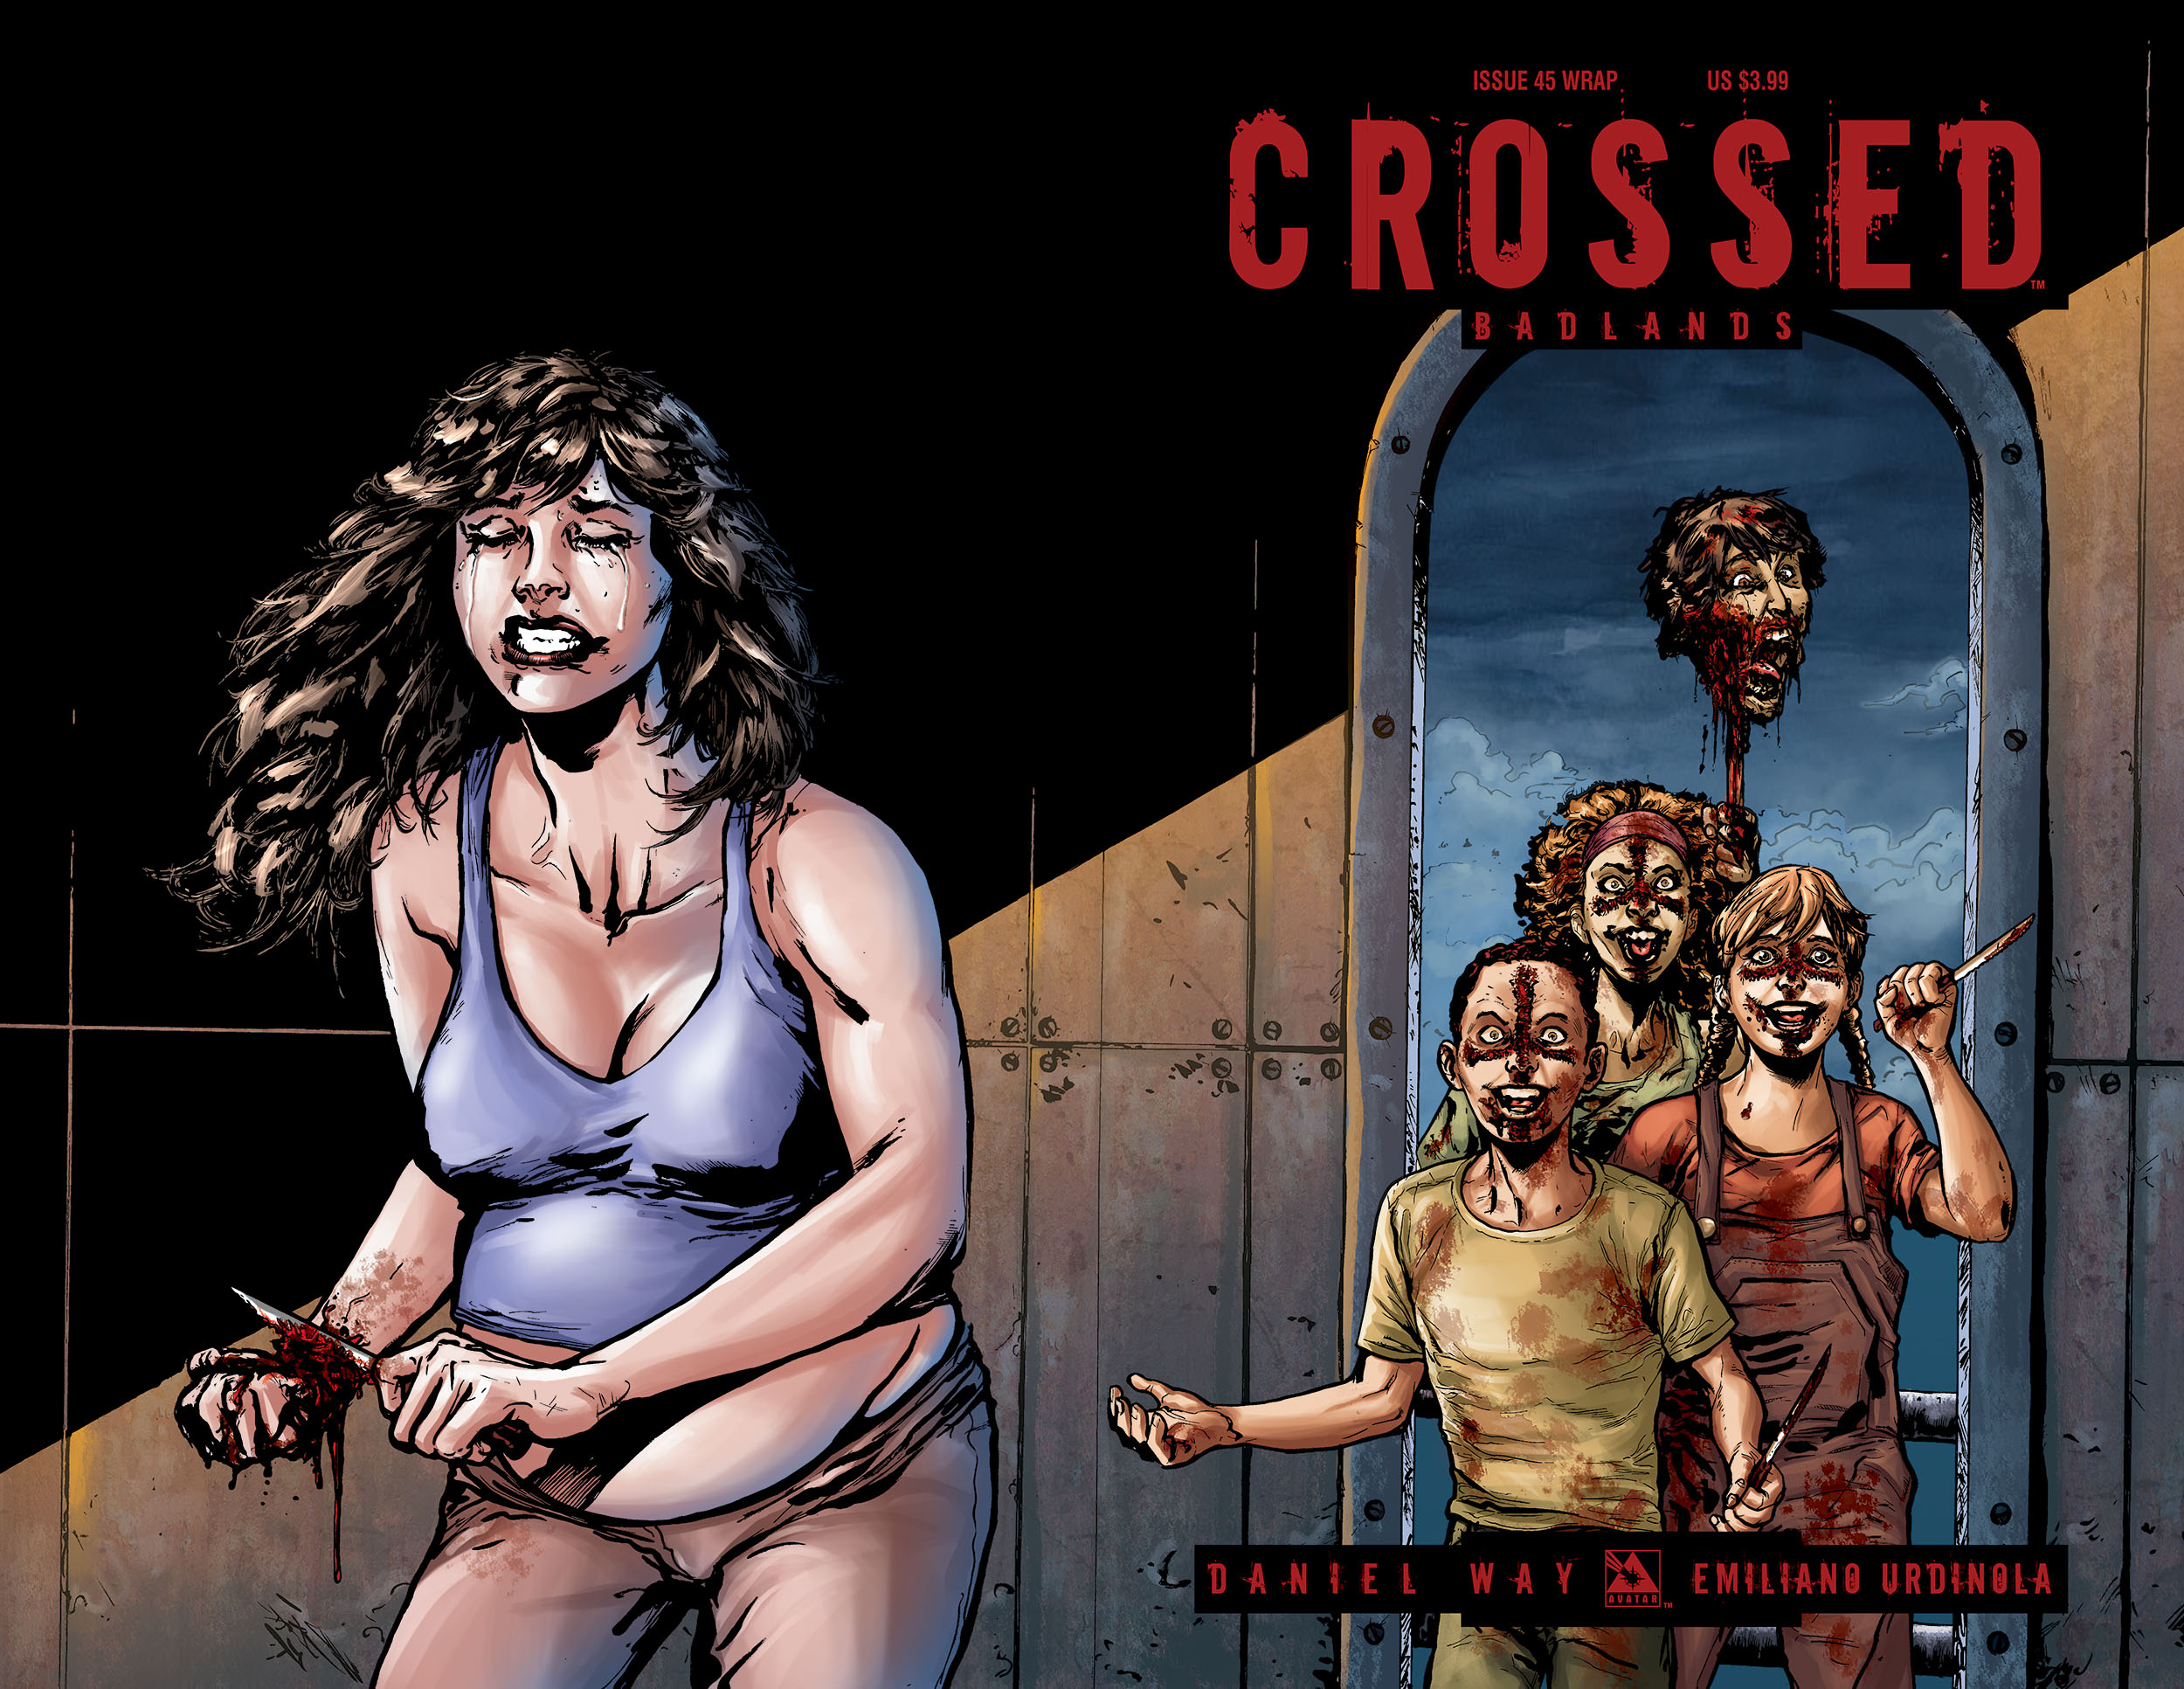 Read online Crossed: Badlands comic - Issue #45 - 4.